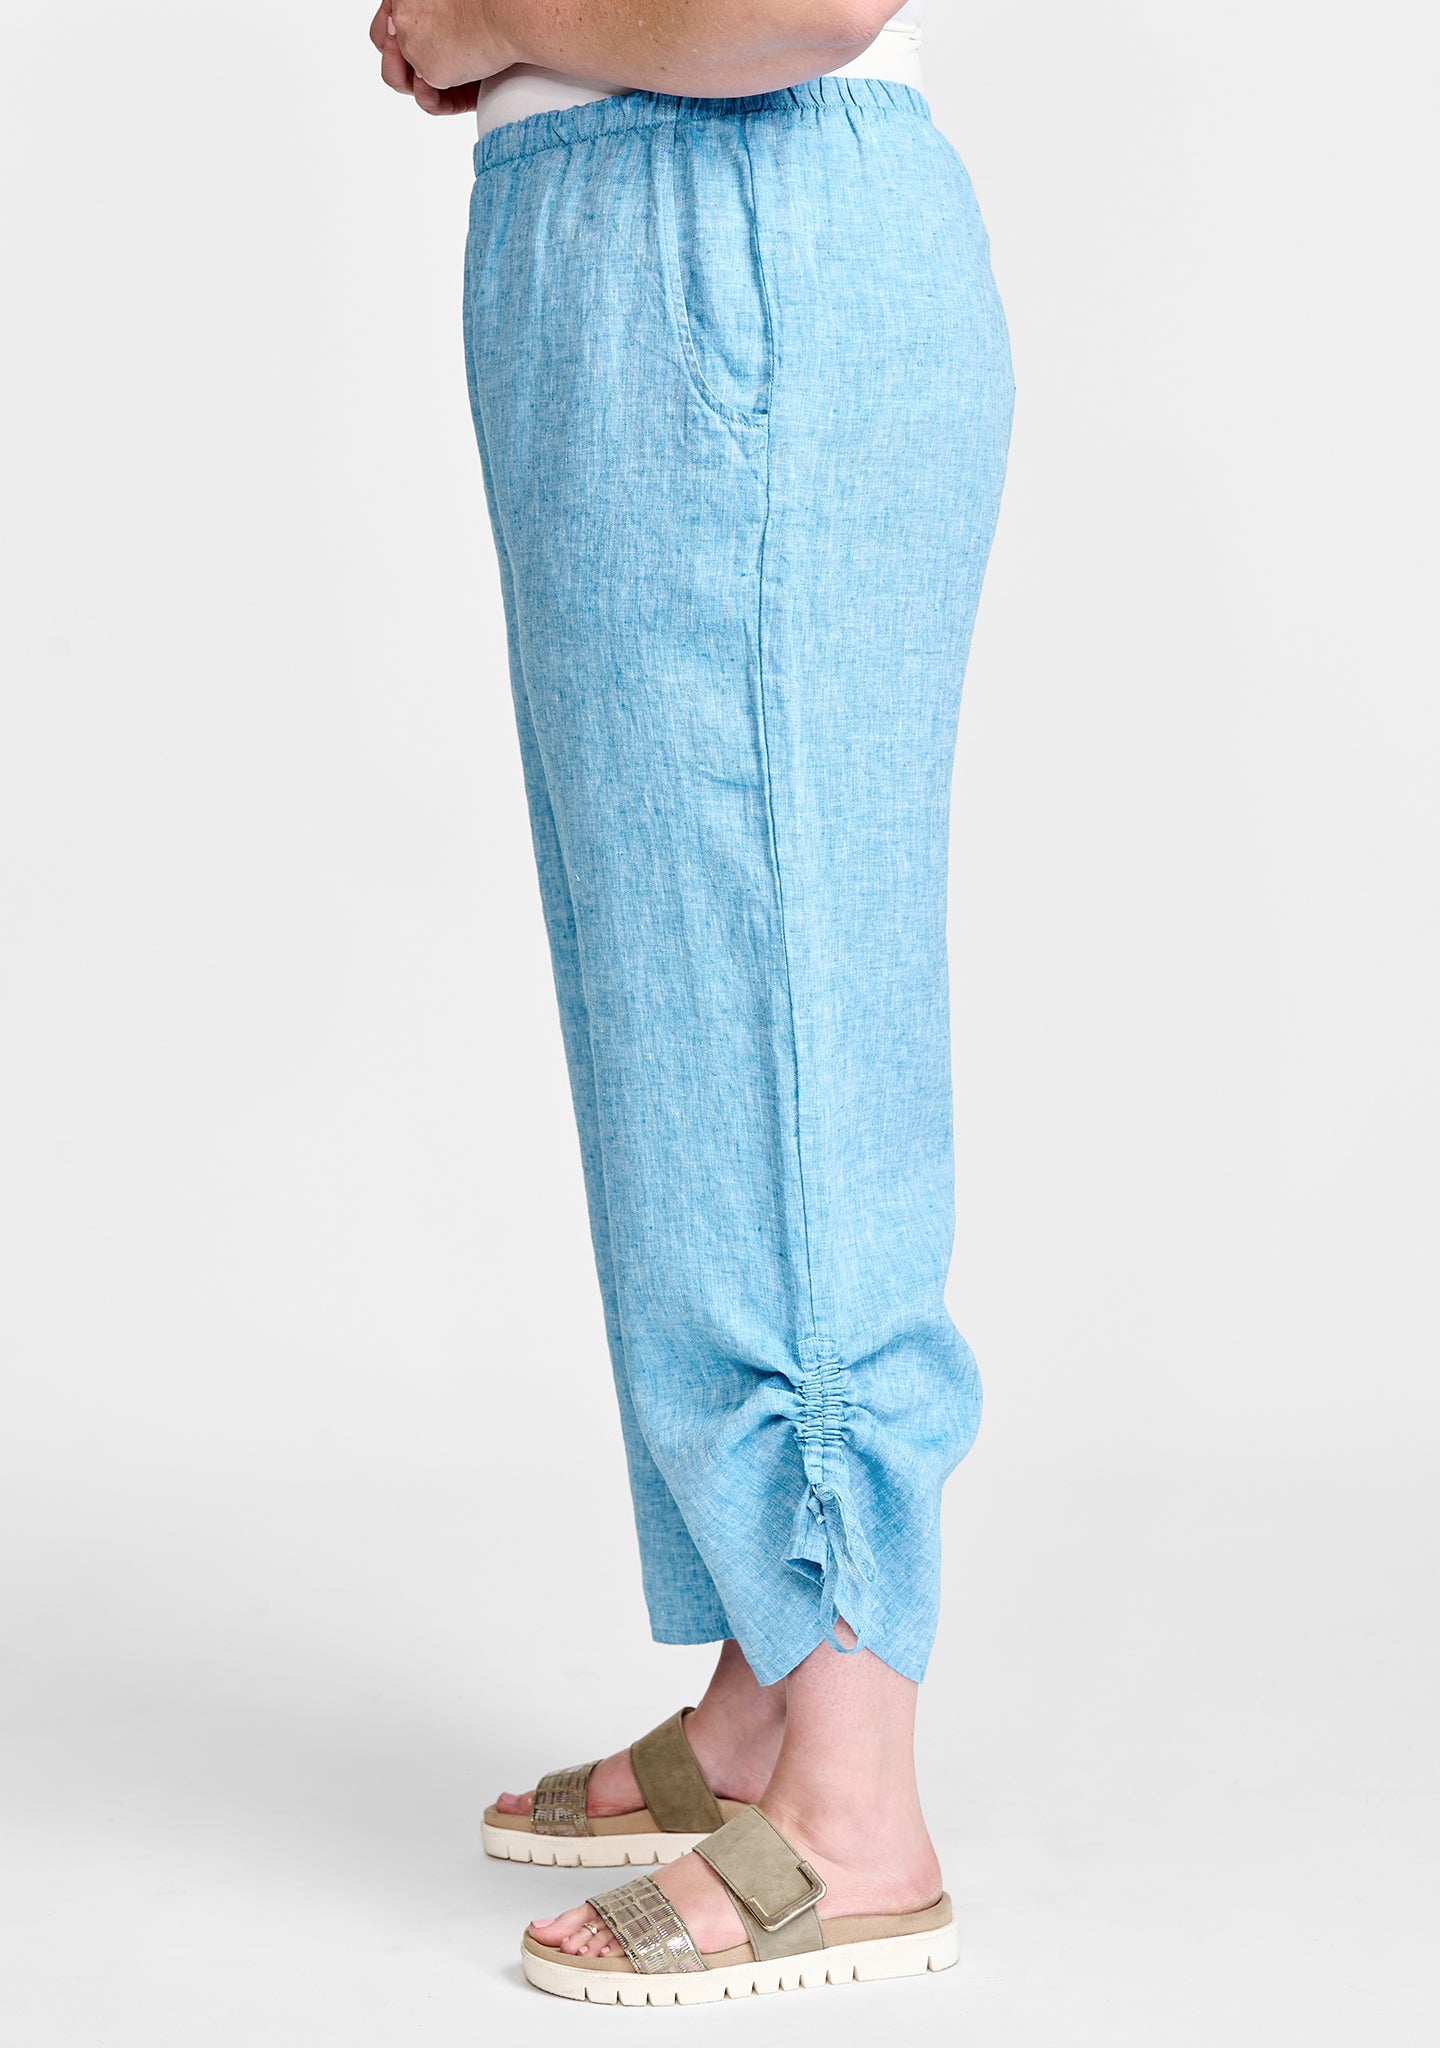 zen pant linen pants with elastic waist details